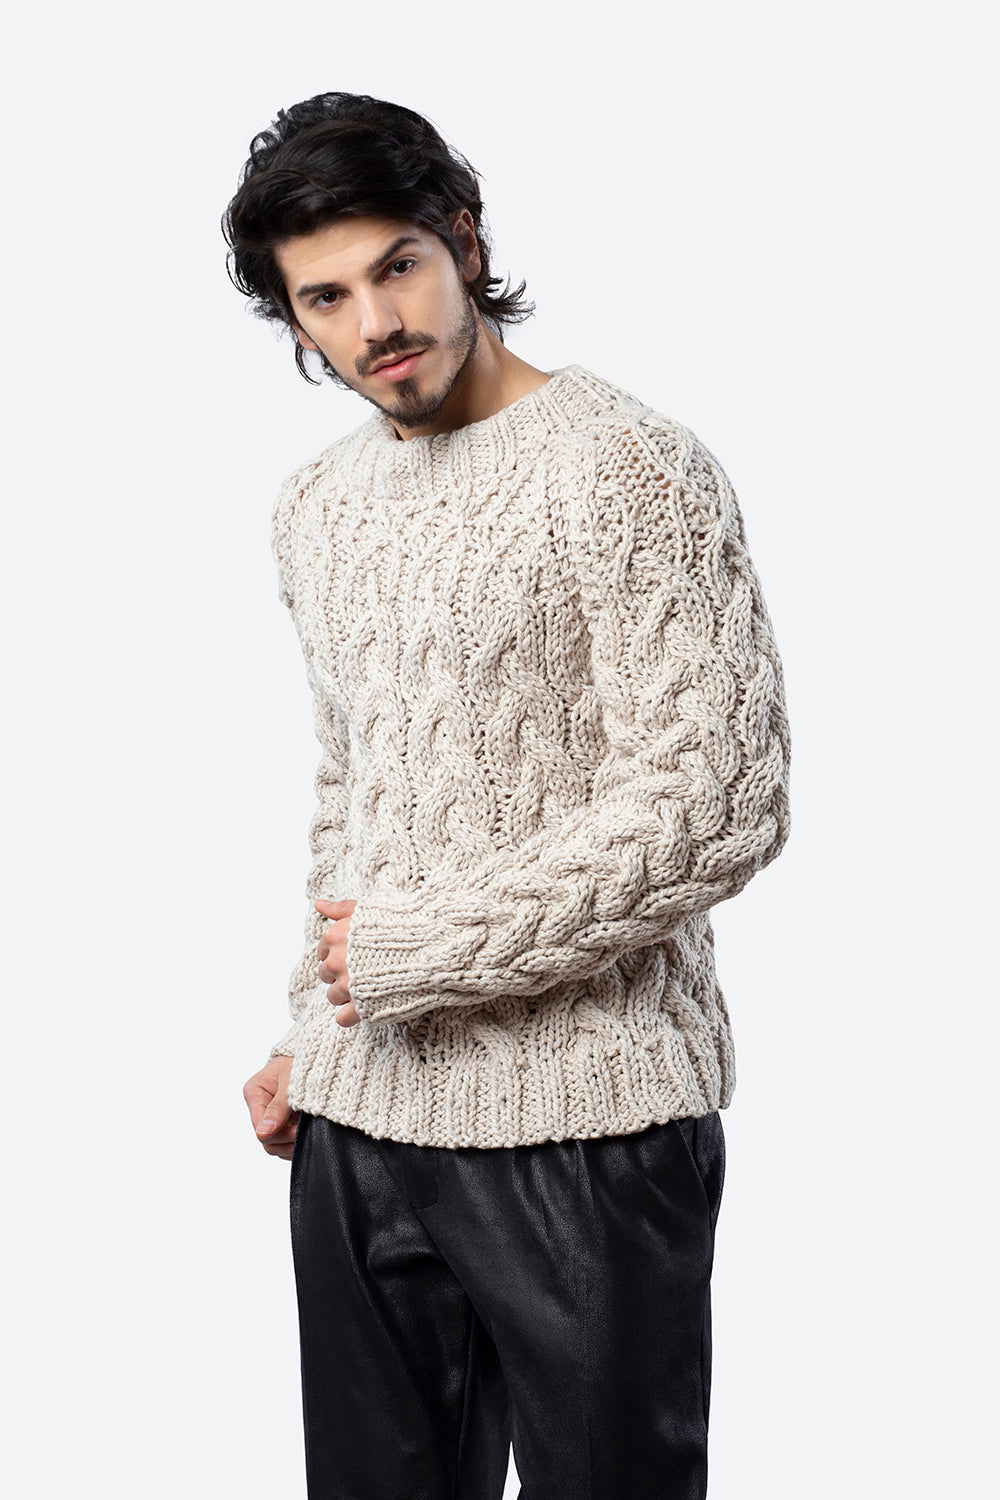 Tucuman Handmade Cotton Cable Sweater in Cream